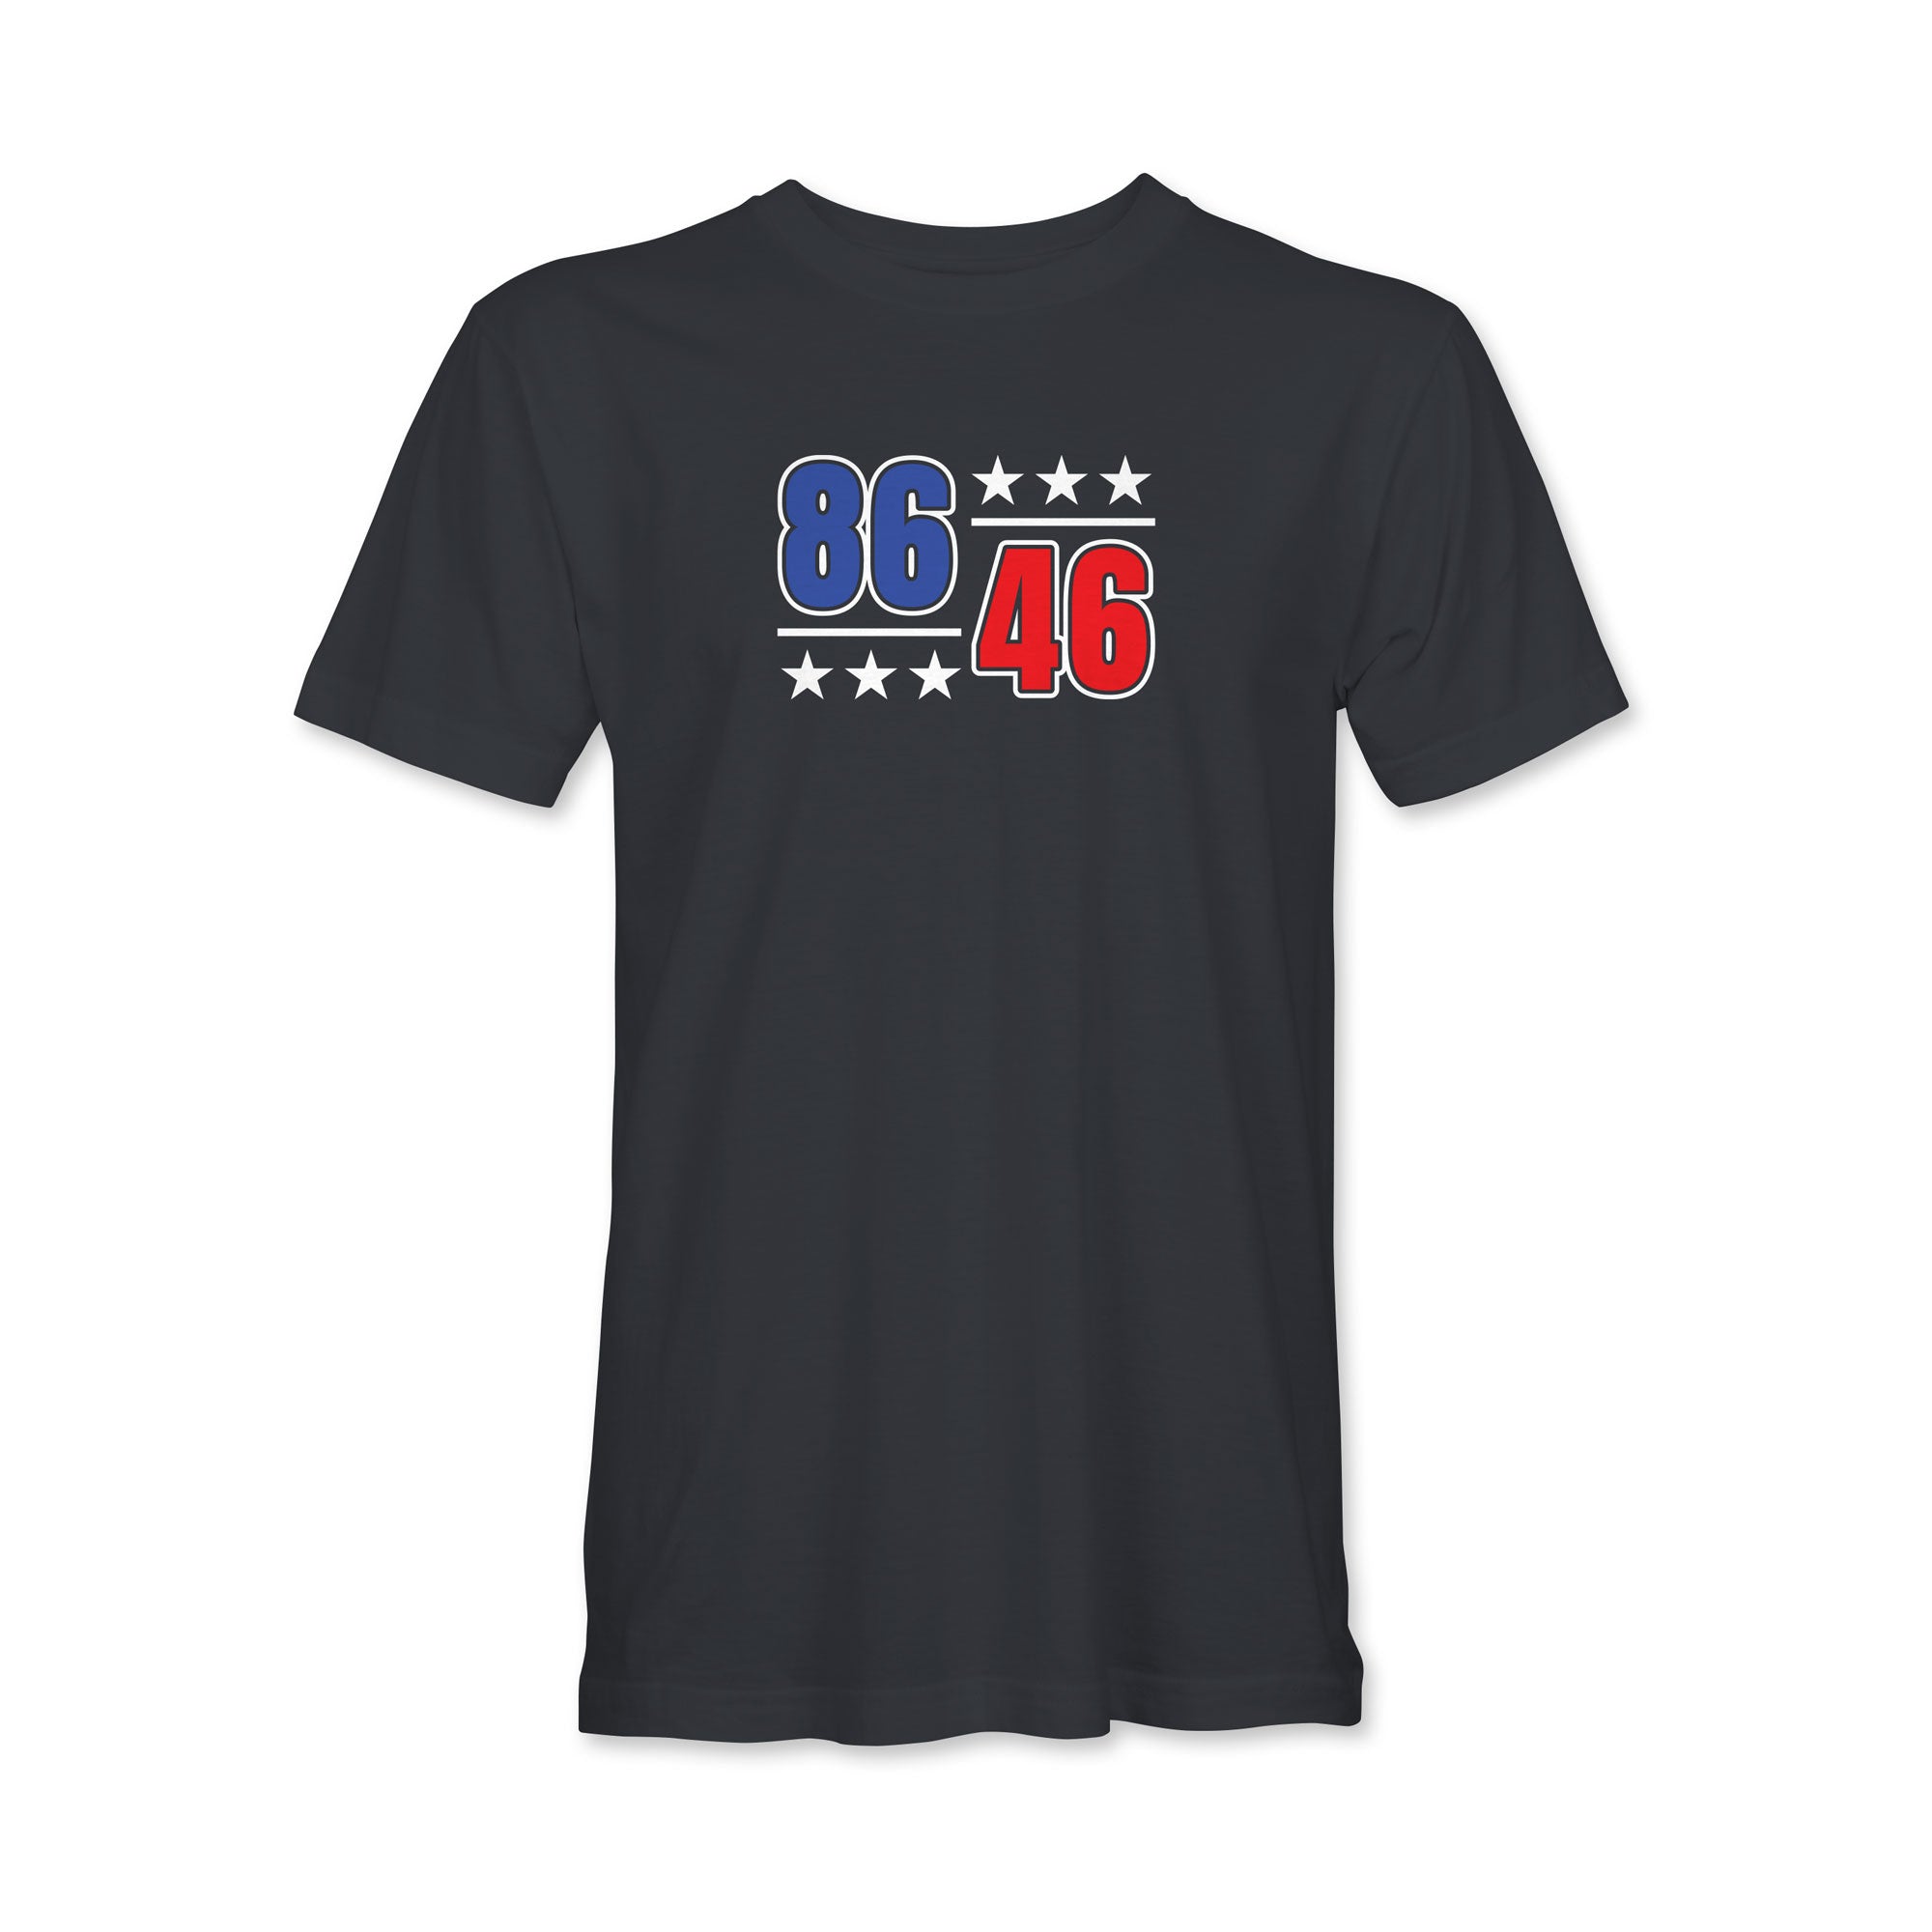 86 46 Done With Joe Biden T-Shirt